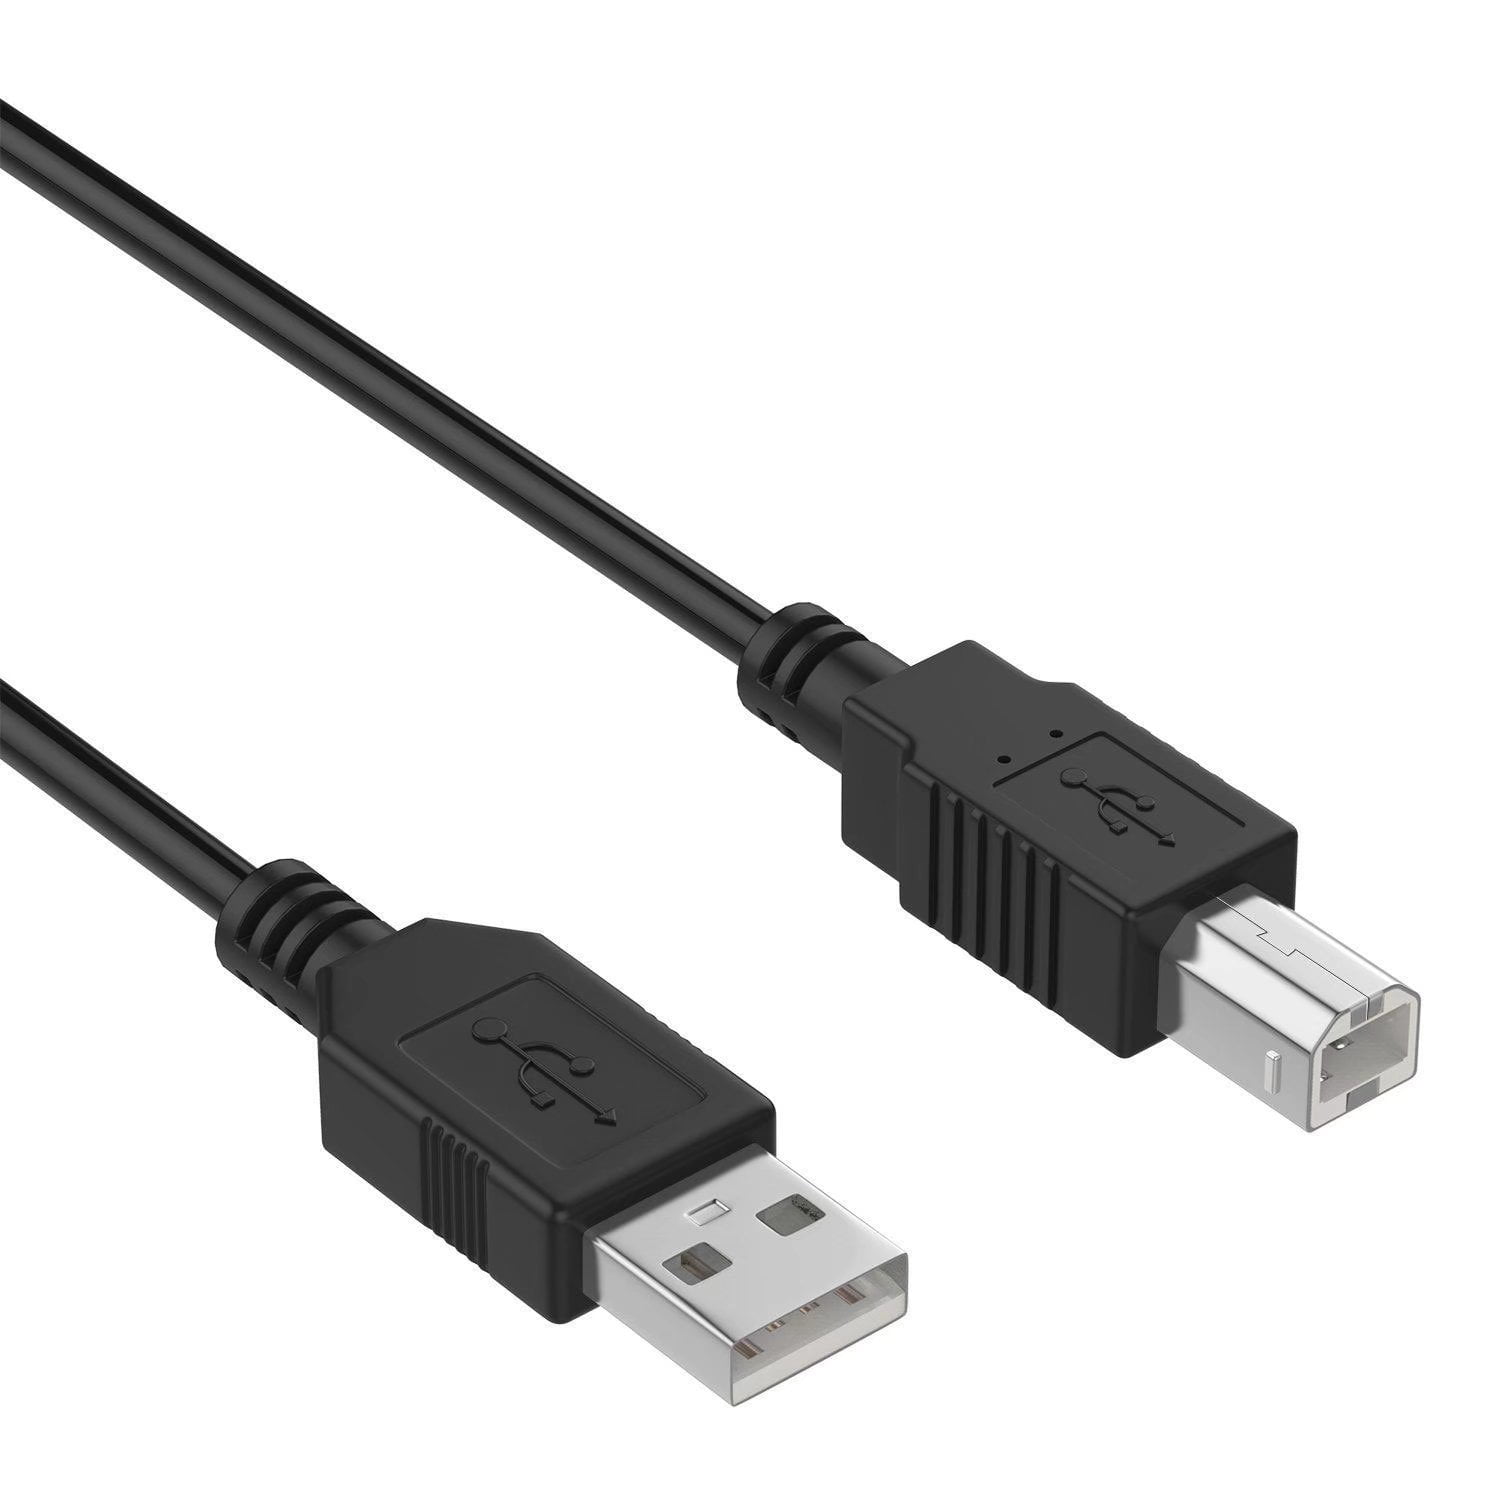 6ft USB Cable Cord for Canon Printer MP950 MP960 MP970 MP980 MP990 MG3222 MG3620 